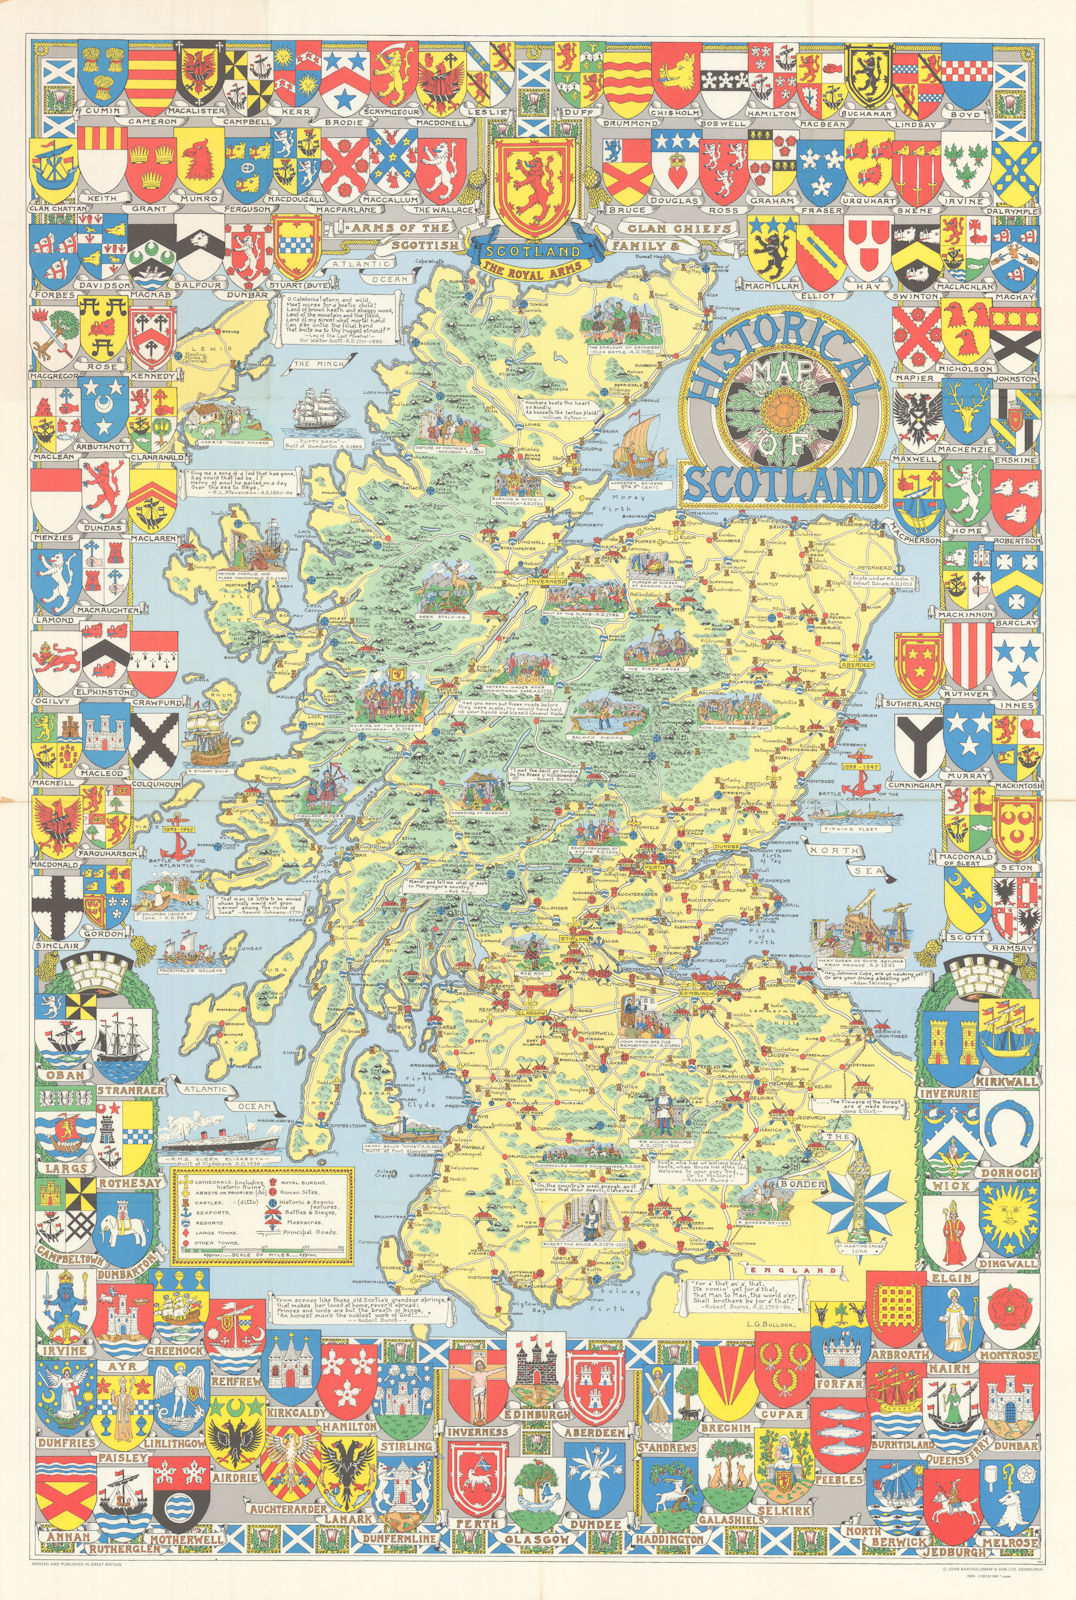 Associate Product Scotland Historical Map. Family crests. Battles dates. 100x67cm BARTHOLOMEW 1985